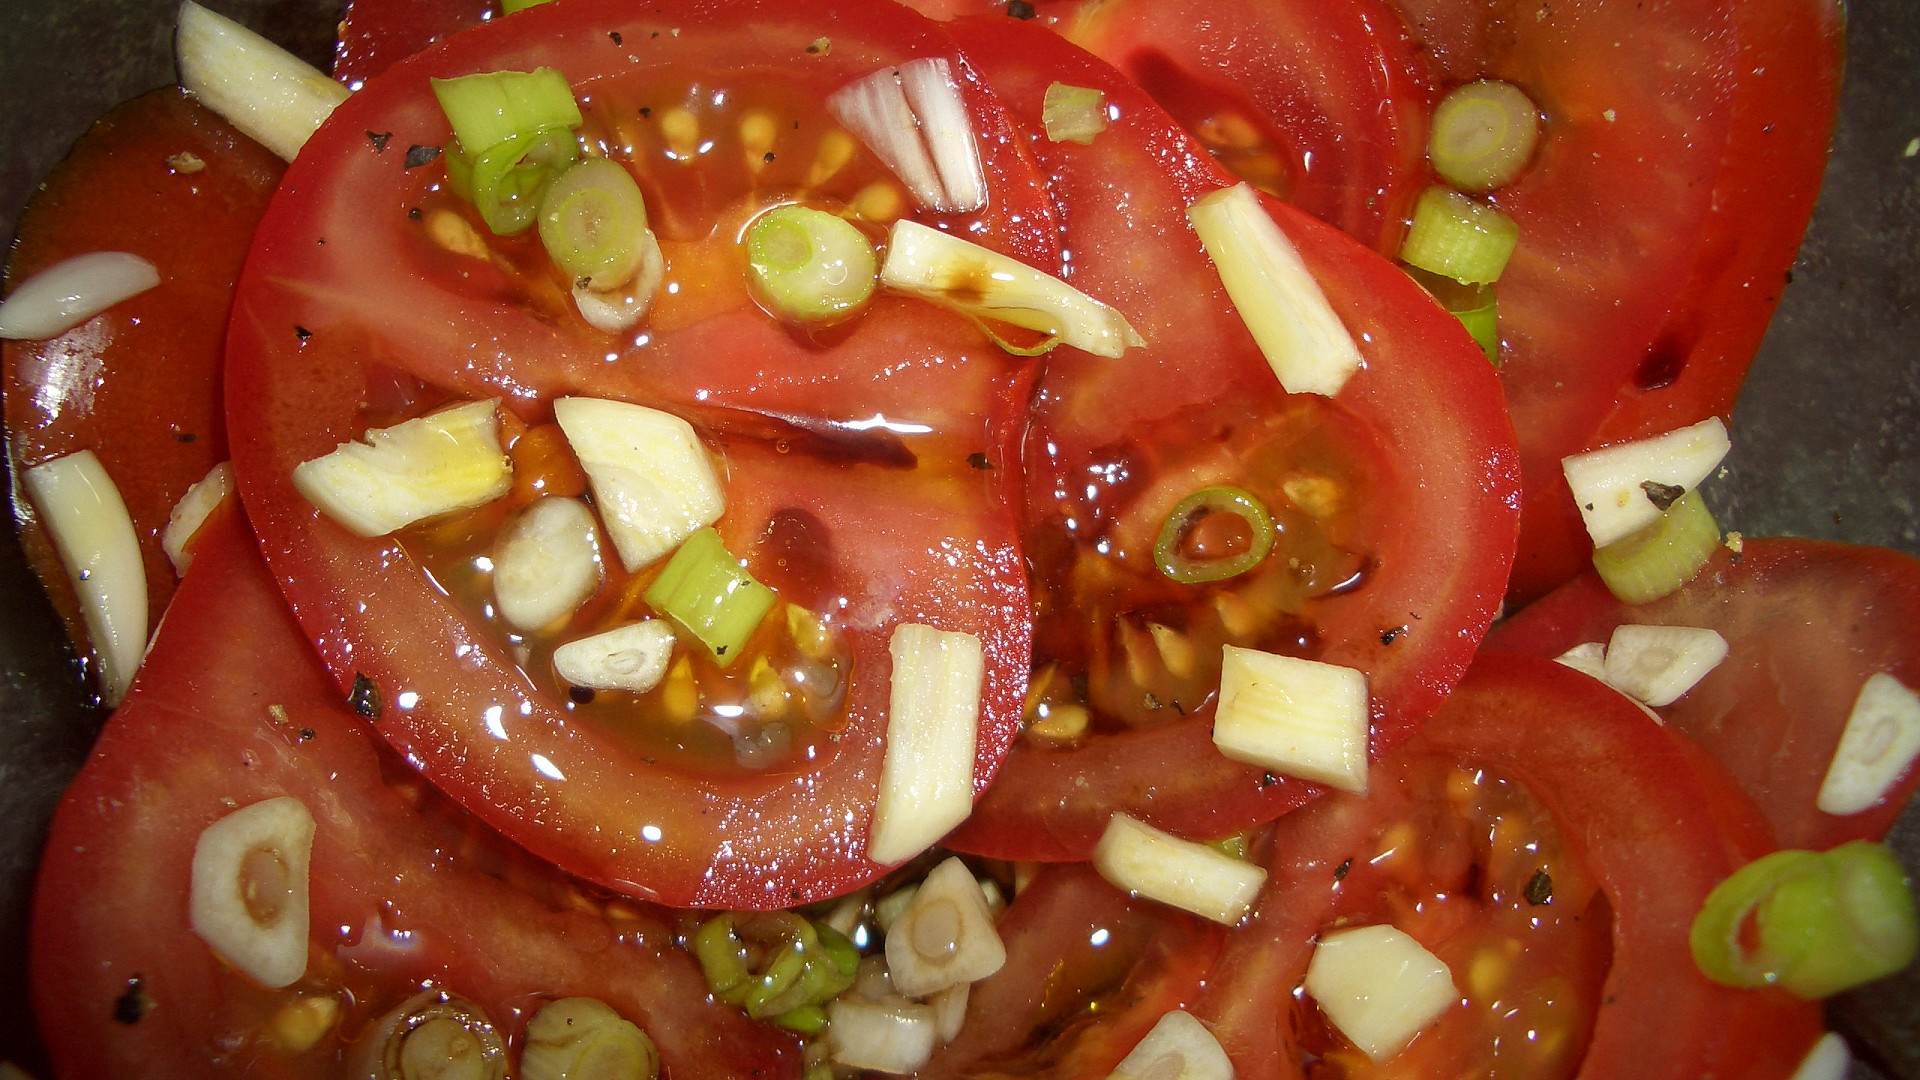 Salát z cibule, česneku a rajčat